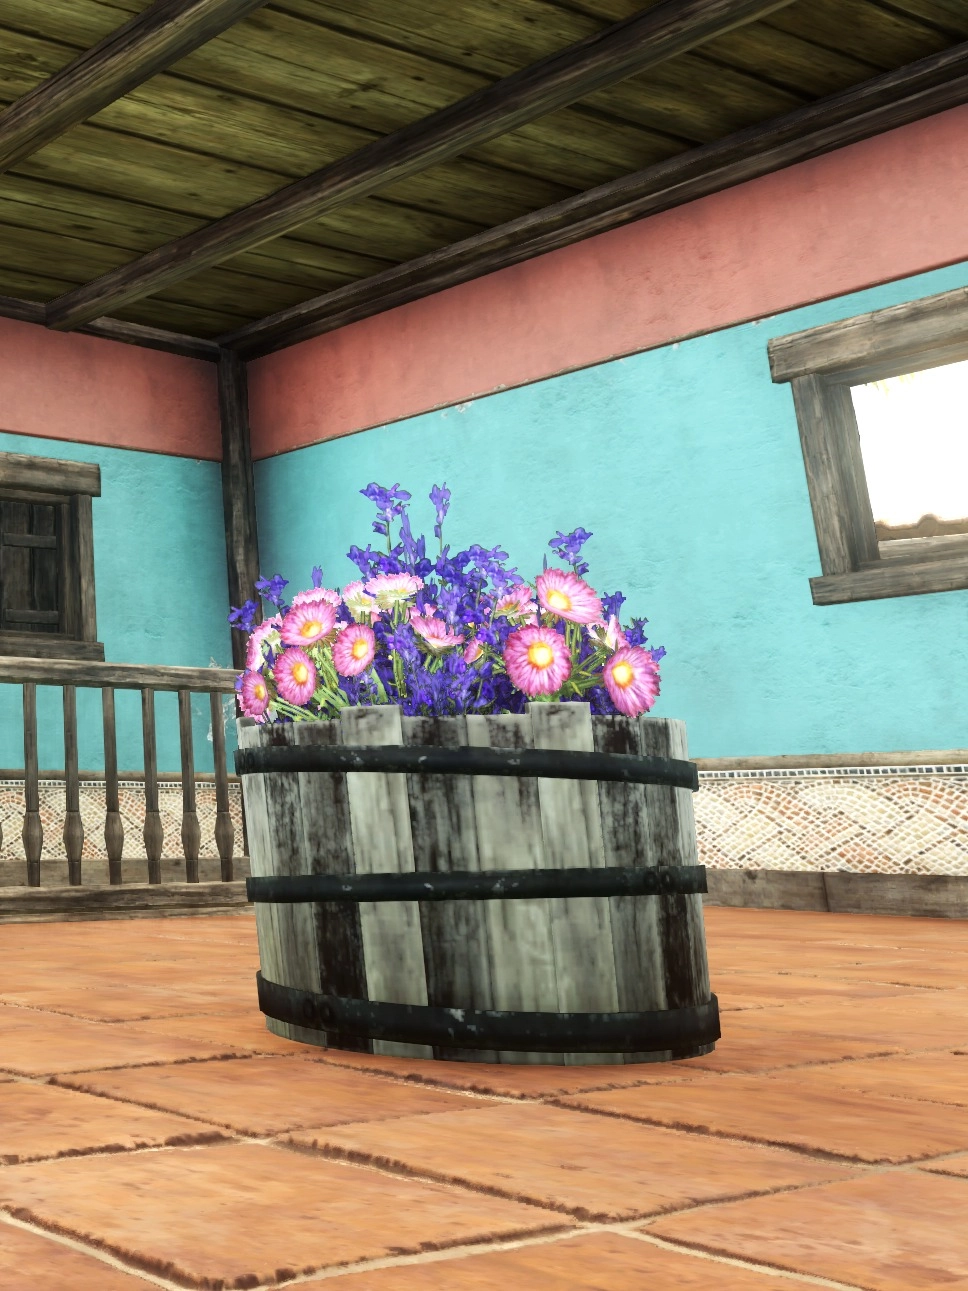 Barrel of Flowers